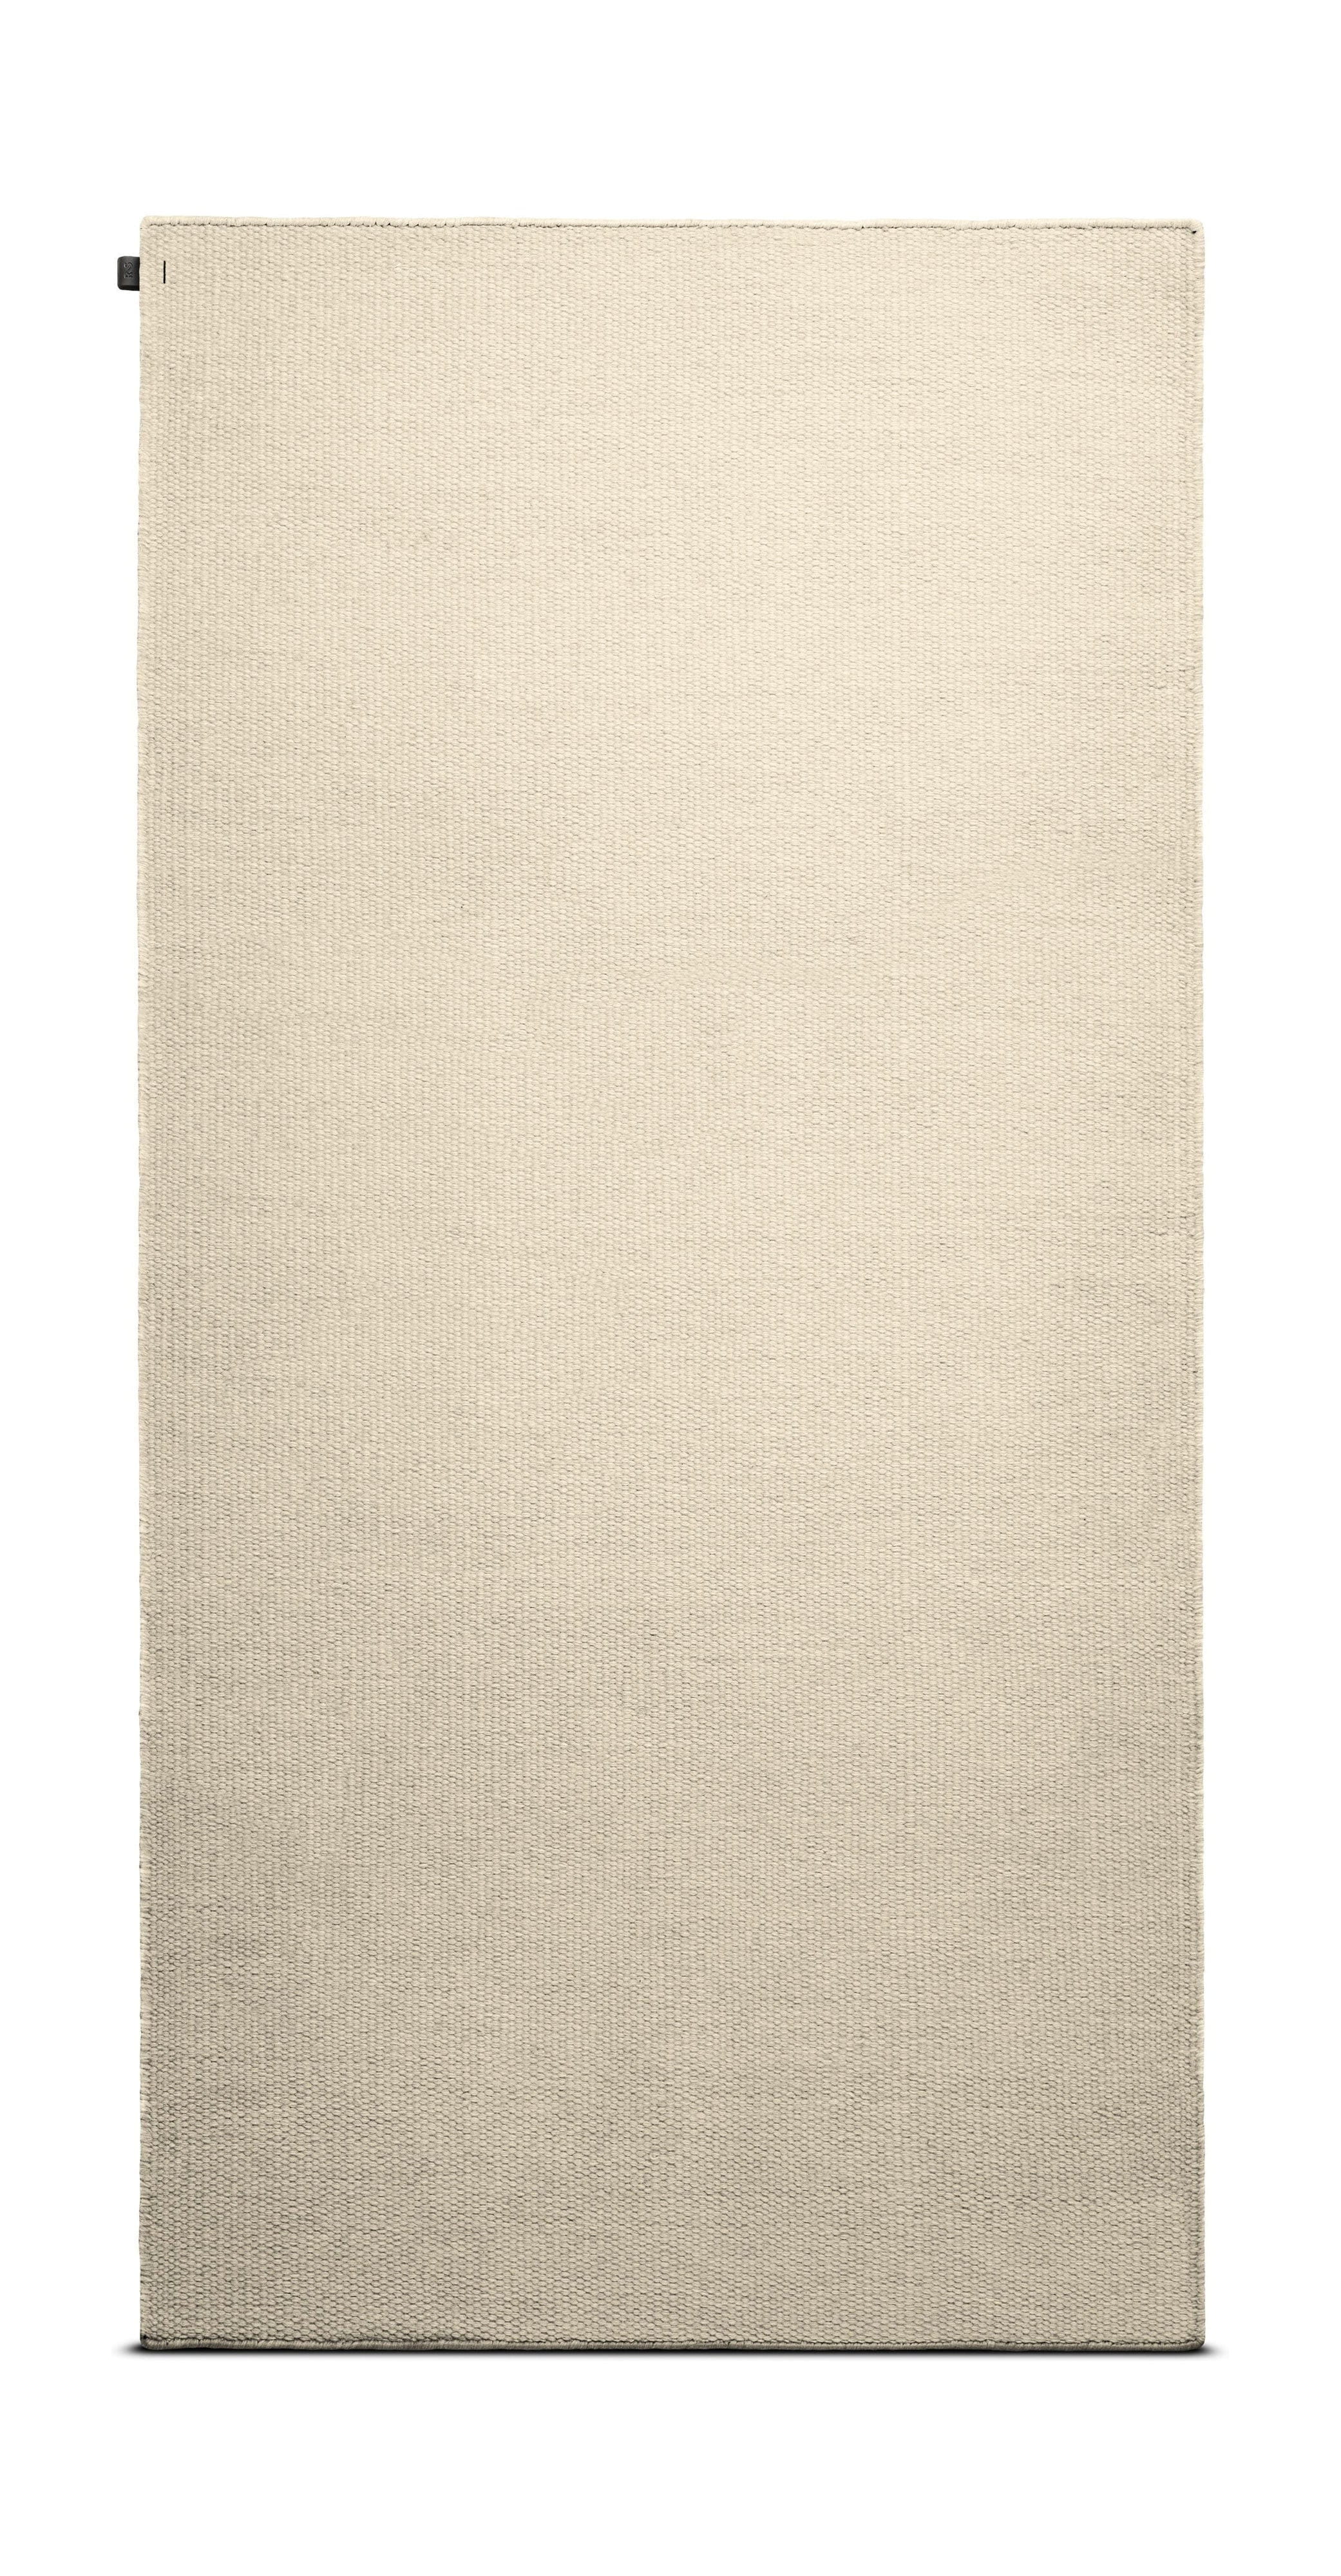 Rug Solid Huisdier tapijt 65 x 135 cm, latte